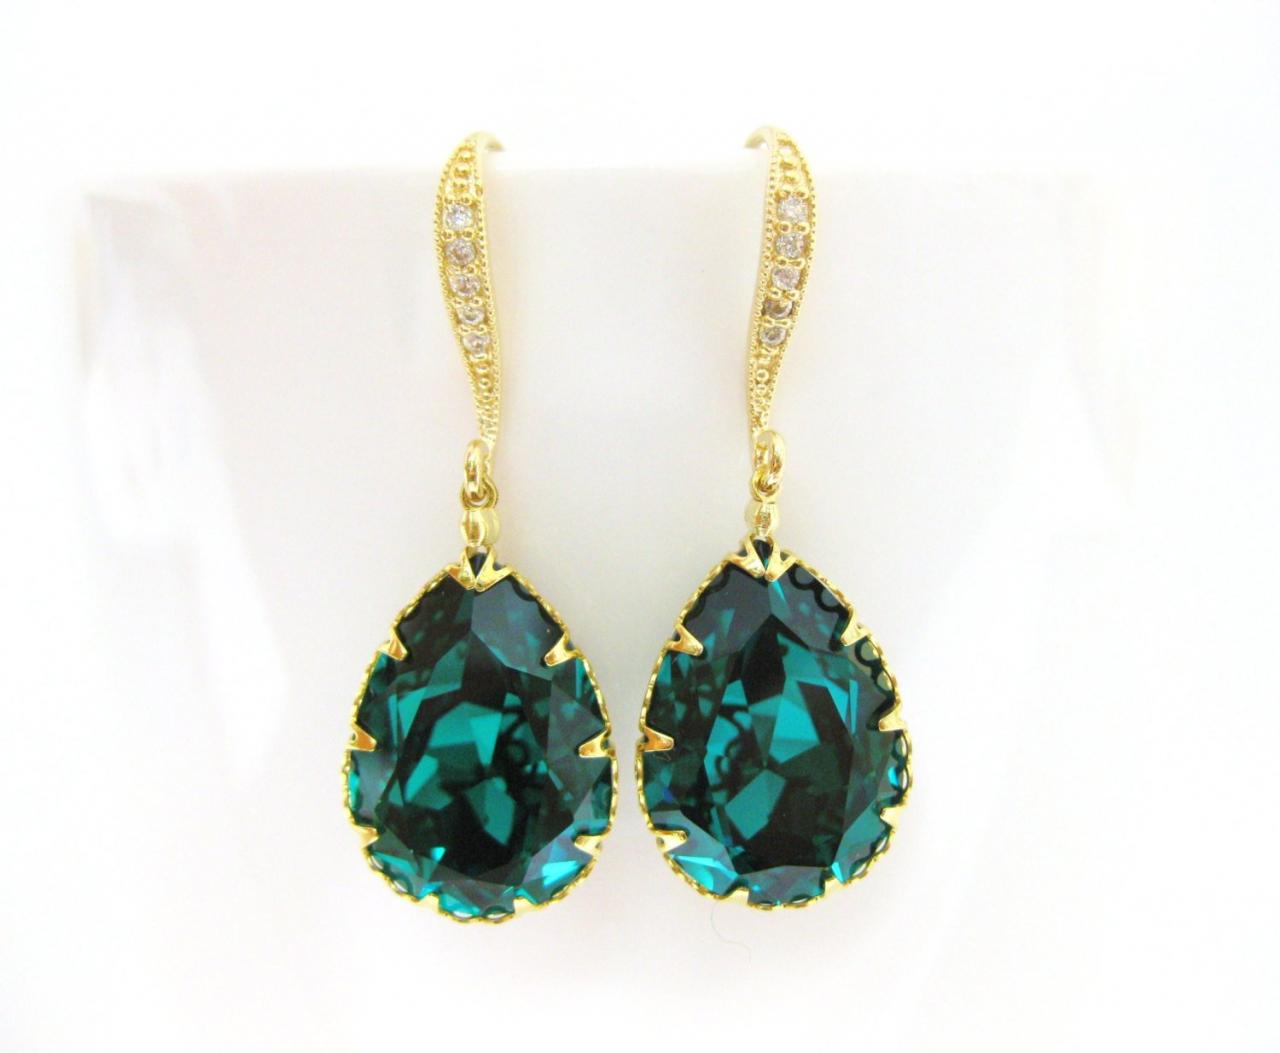 Bridesmaid/'s earrings Teardrop earrings Green crystal earrings Emerald green crystal Crystal drop earrings Crystal dangle earrings